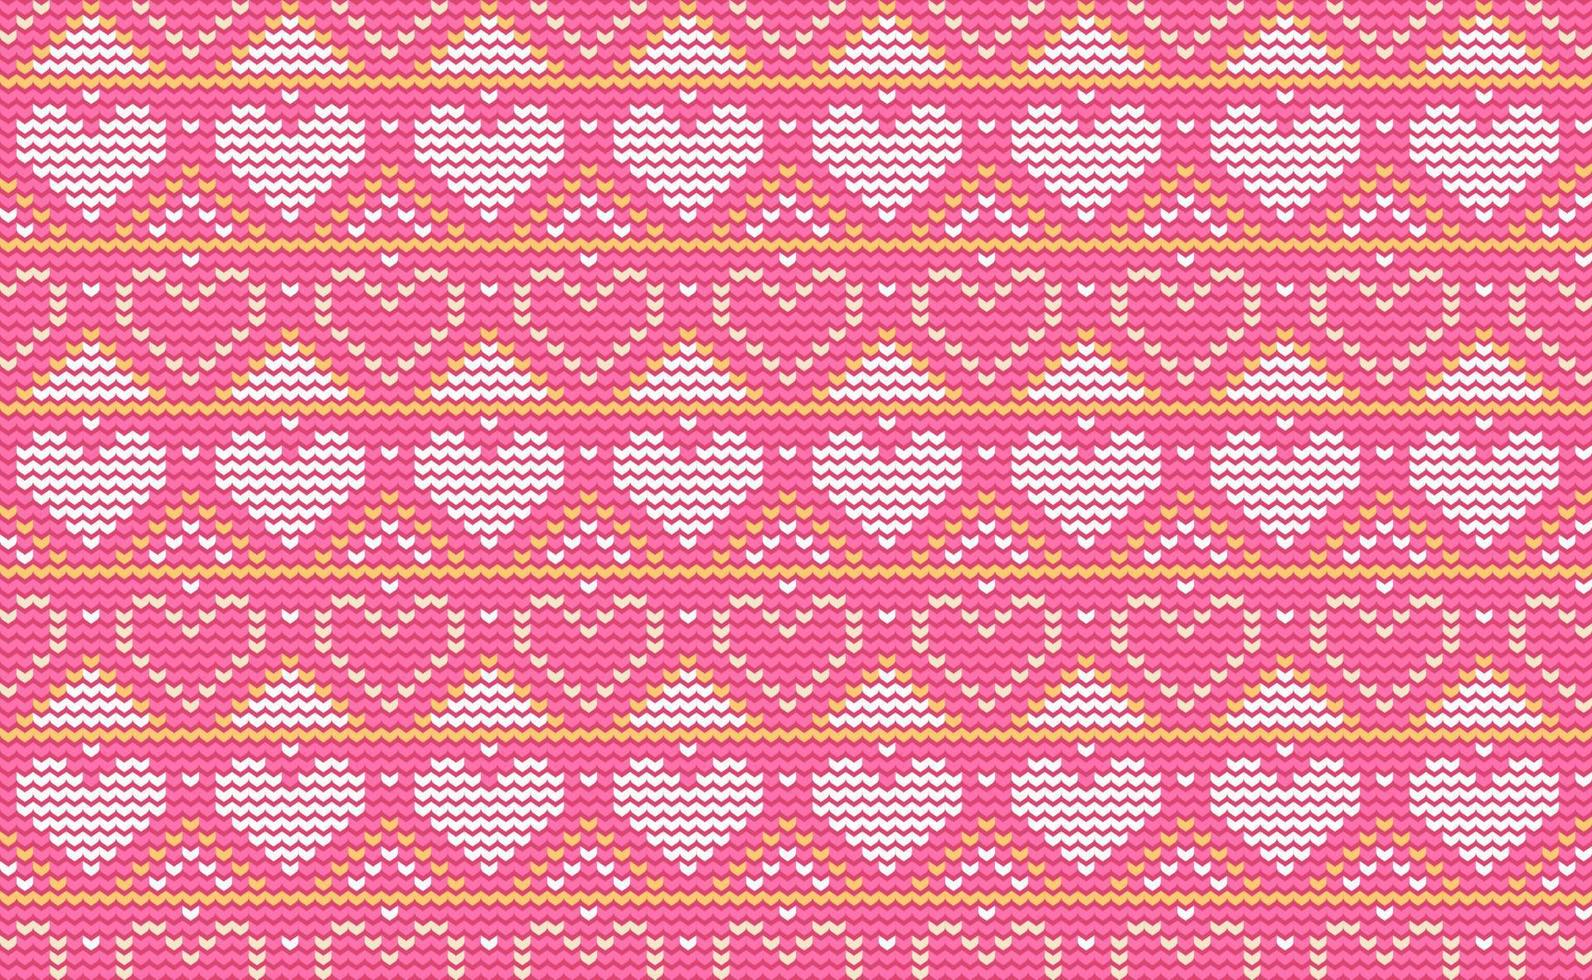 Heart Knit Pattern Vector, Love Embroidery Antique Background, Handcraft Craft wallpaper, Fabric Crochet art vector